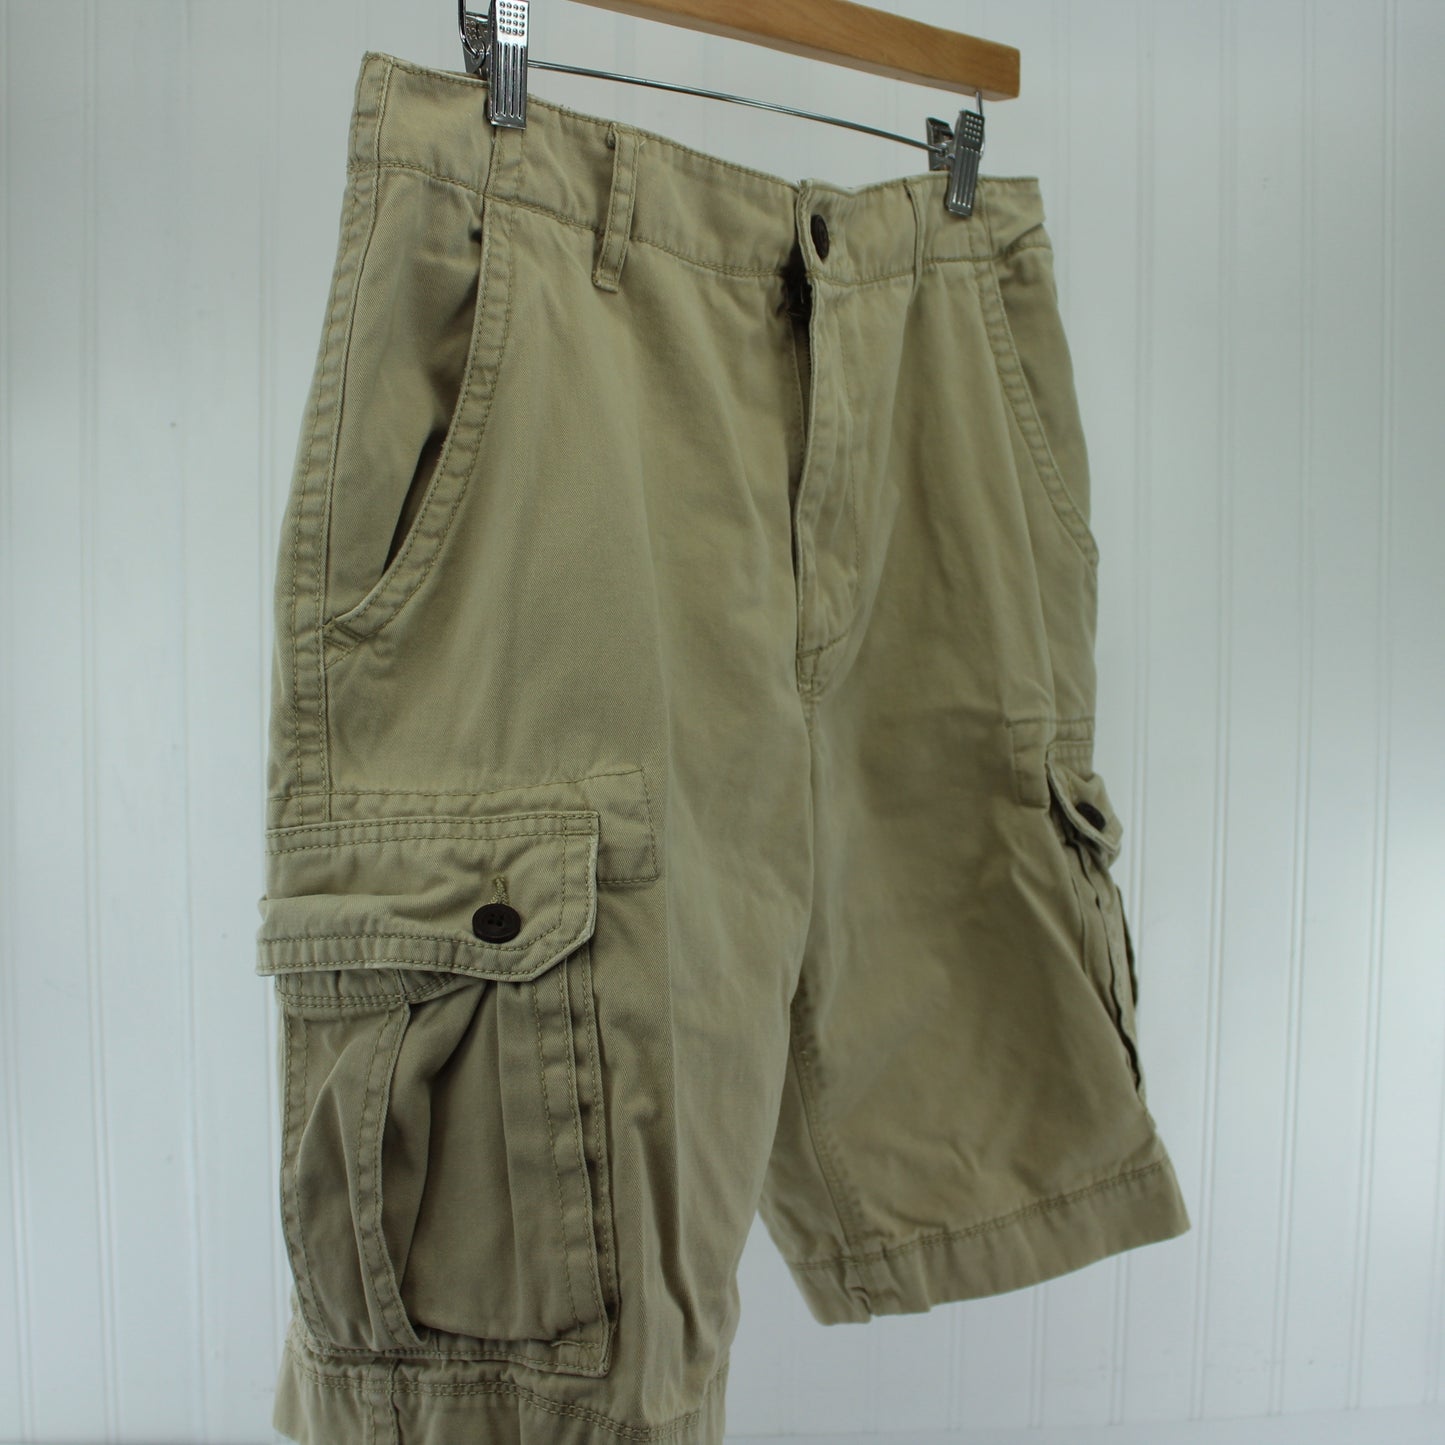 Arizona 100% Cotton Khaki Cargo Pants Size 32 Inseam 9 1/2" 6 pockets